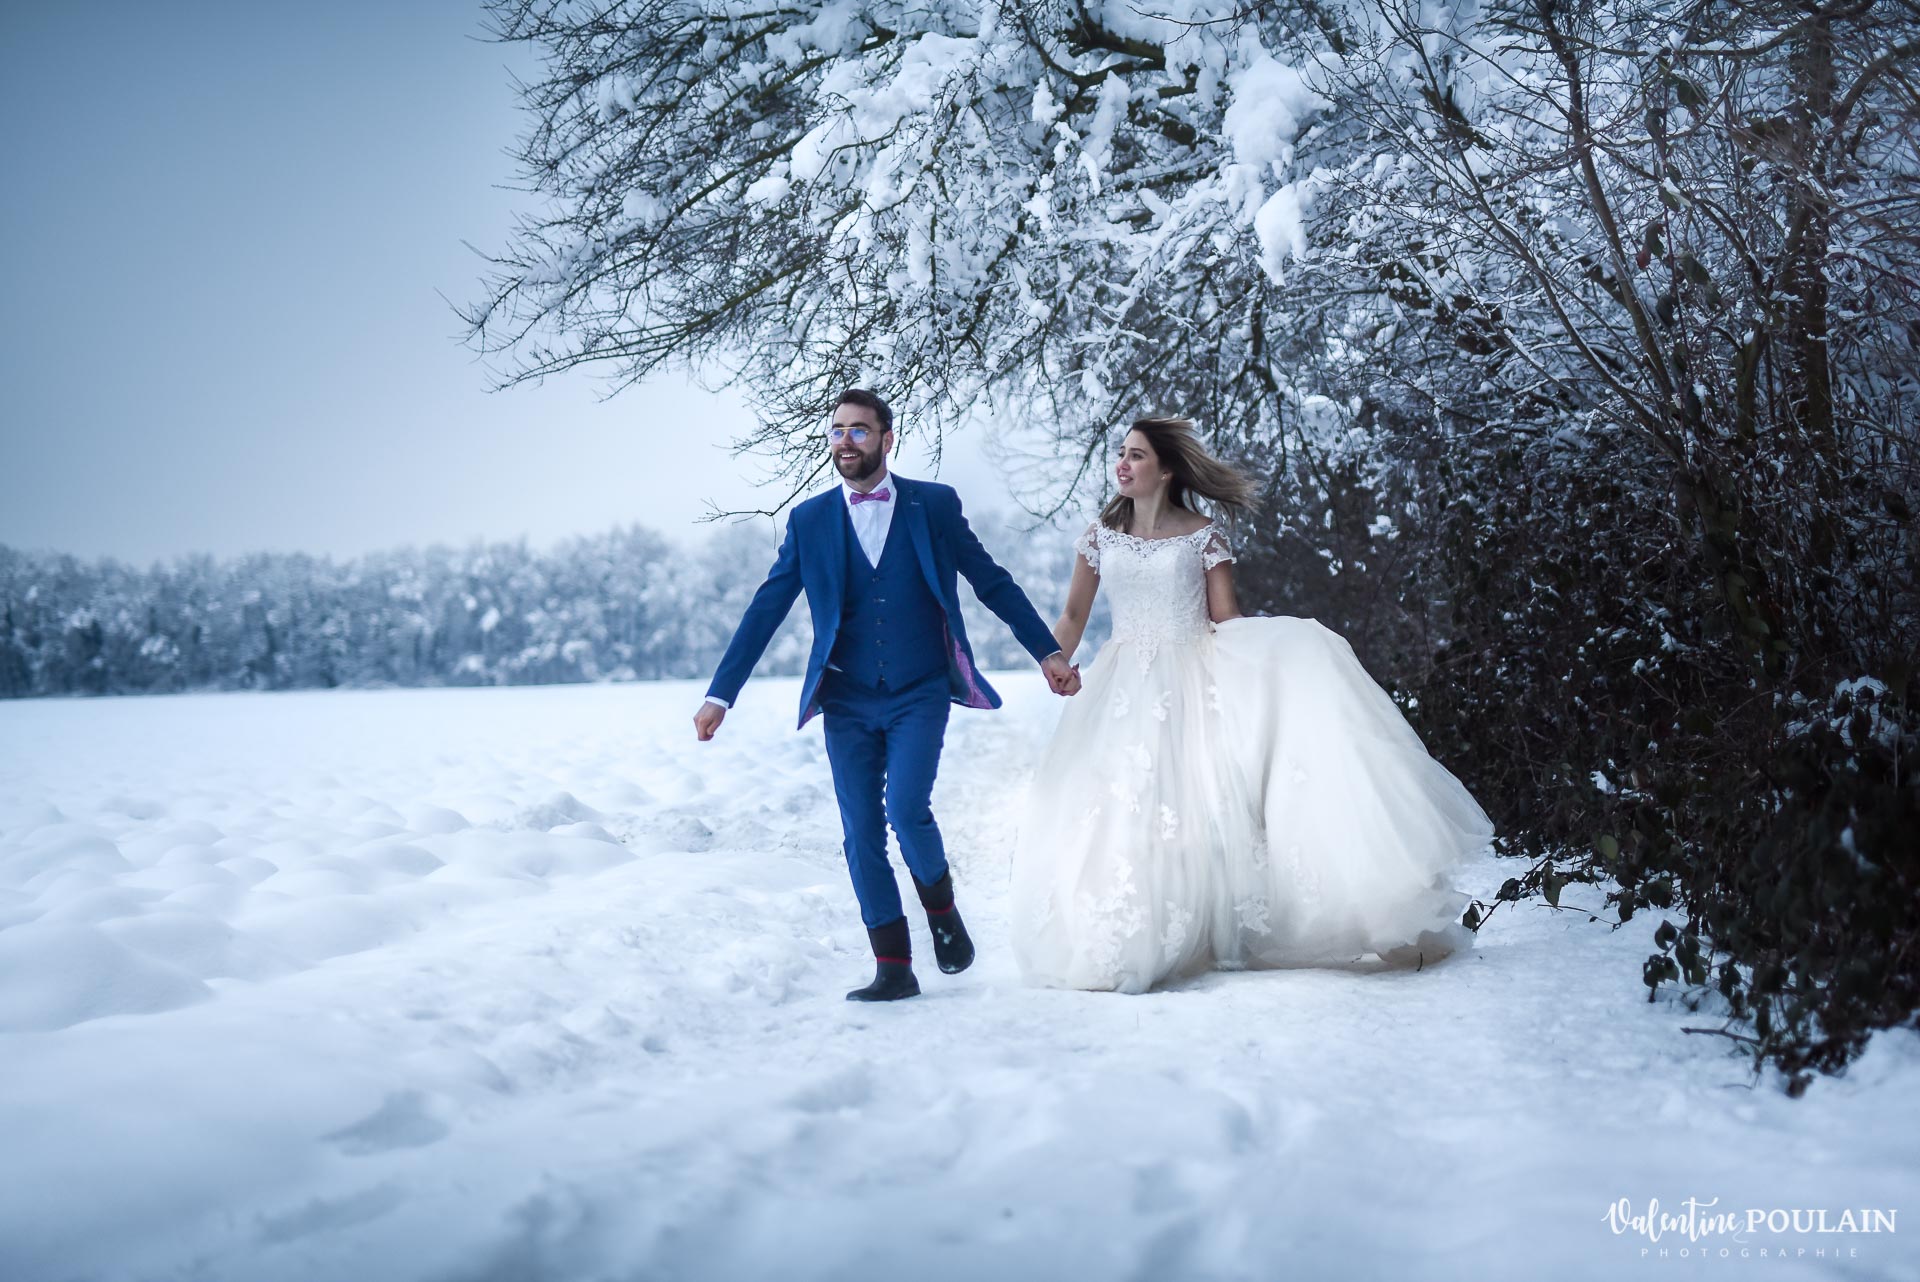 Photo mariage neige hiver - Valentine Poulain avancer